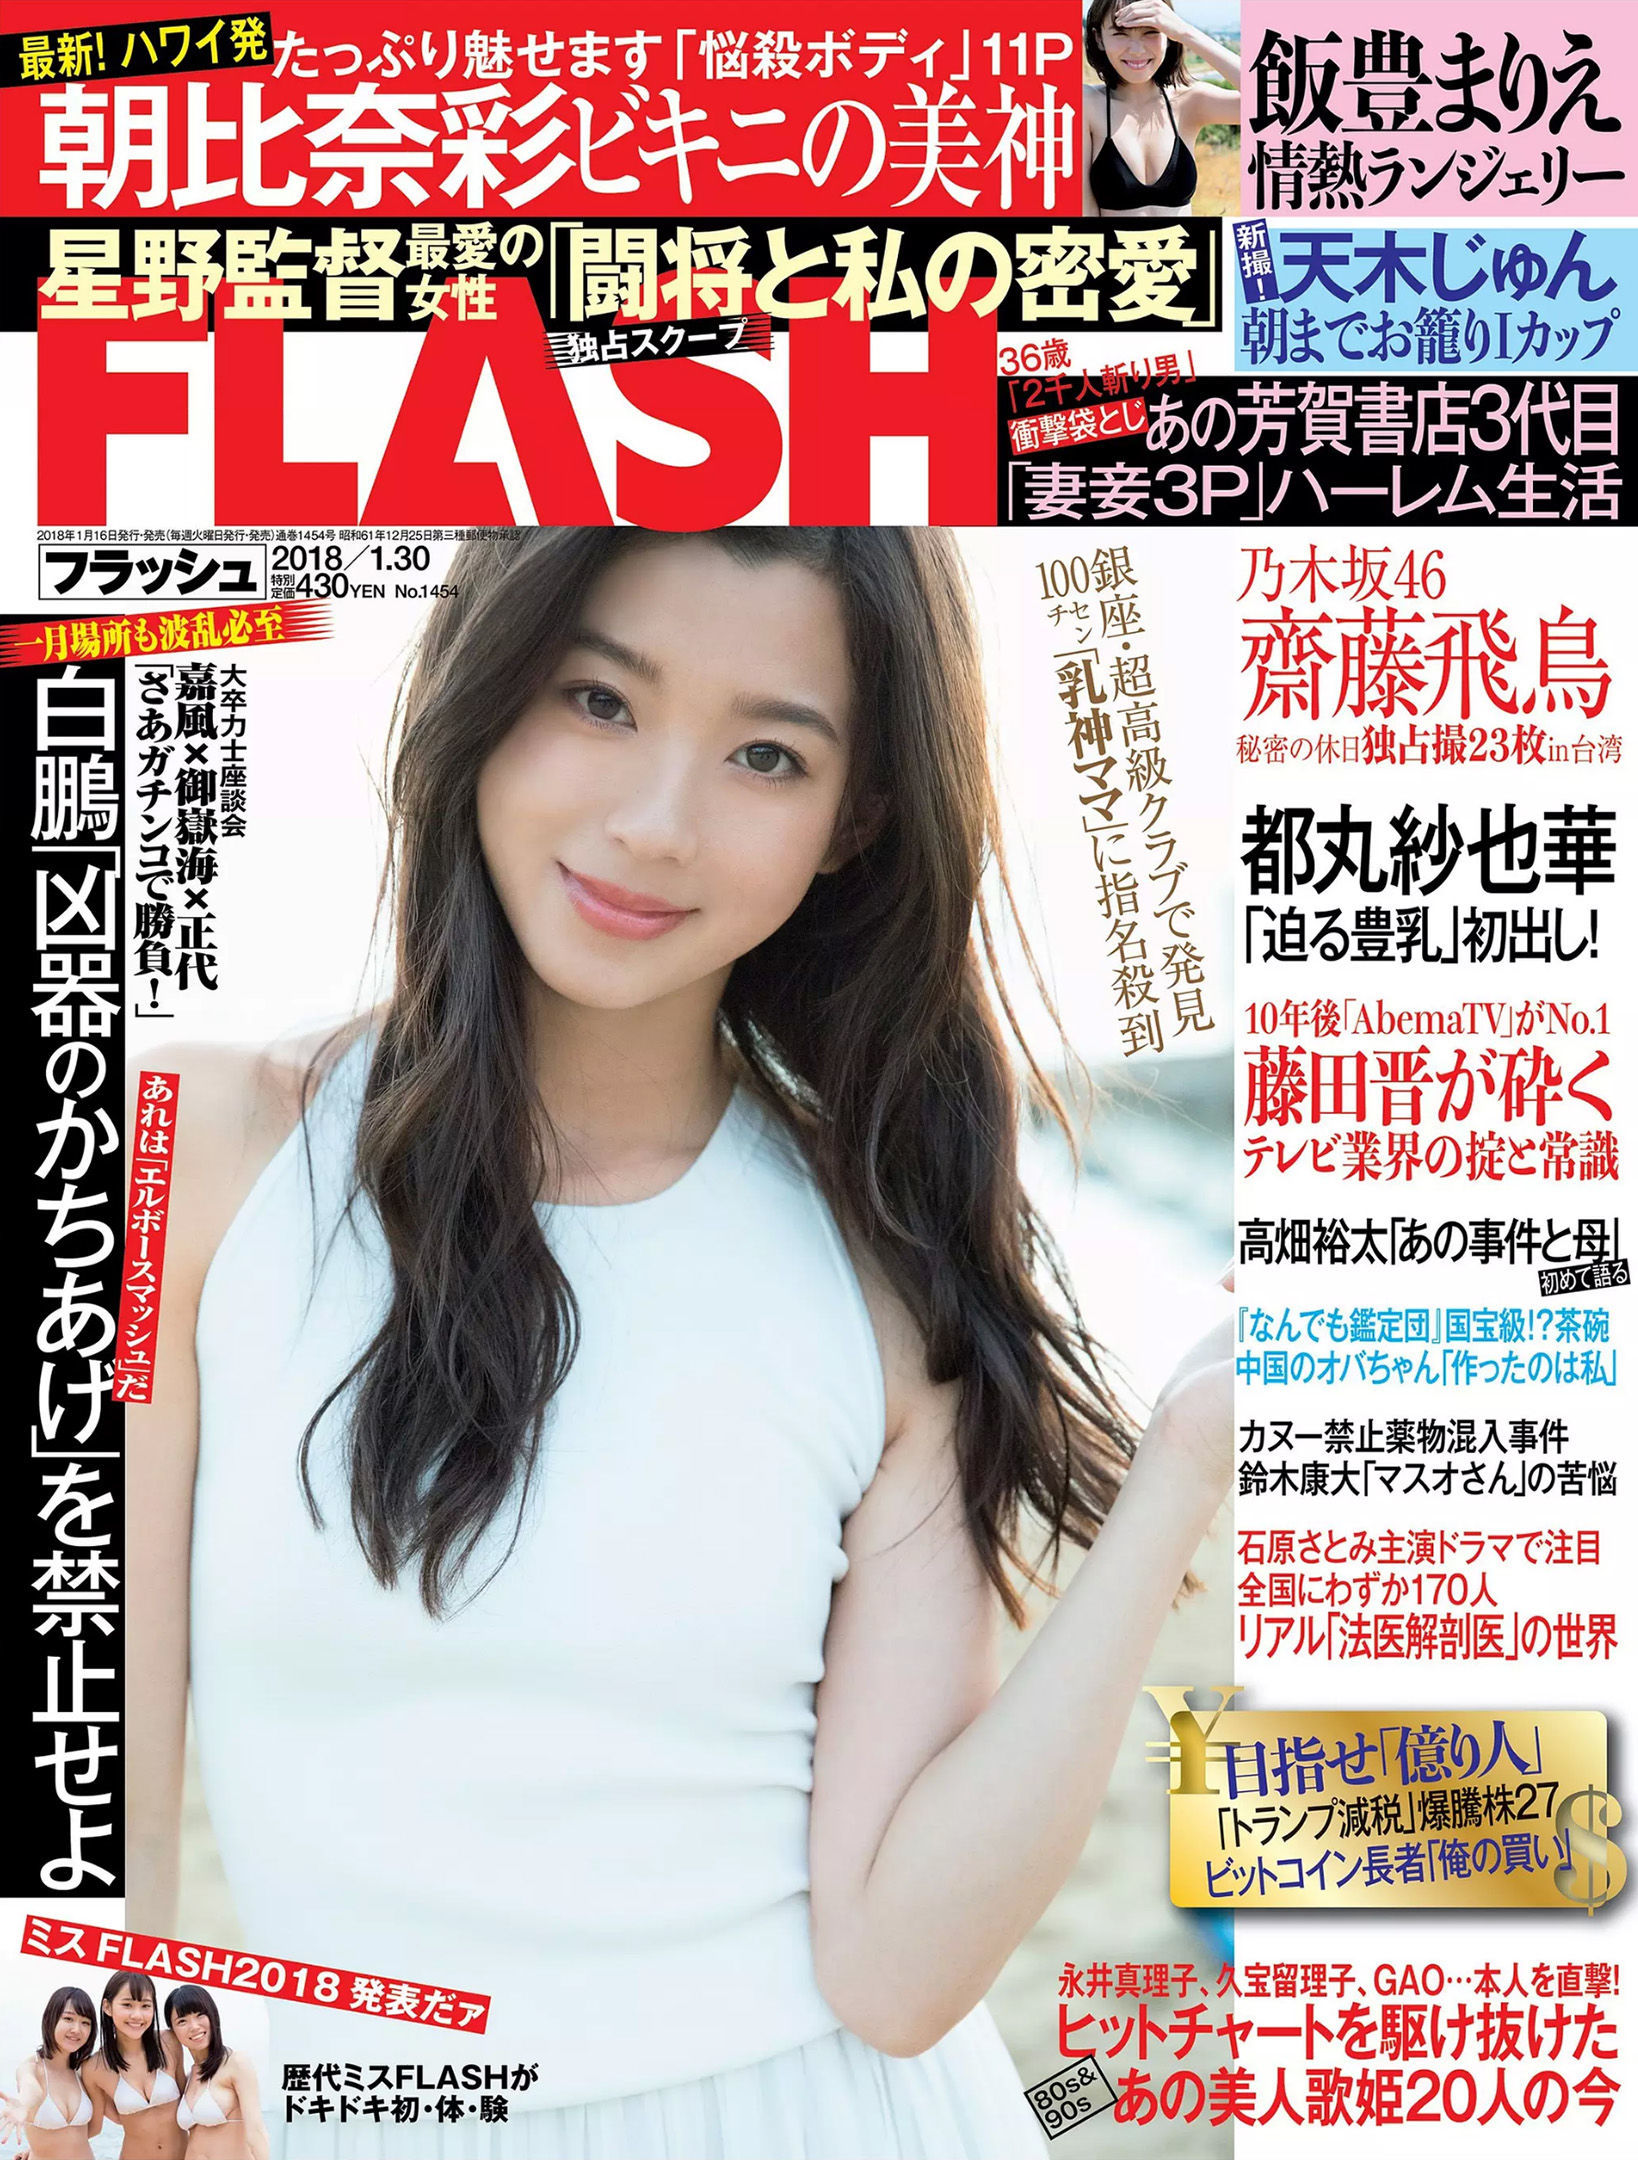 [FLASH]杂志:朝比奈彩高品质写真大图收藏合集(24P)